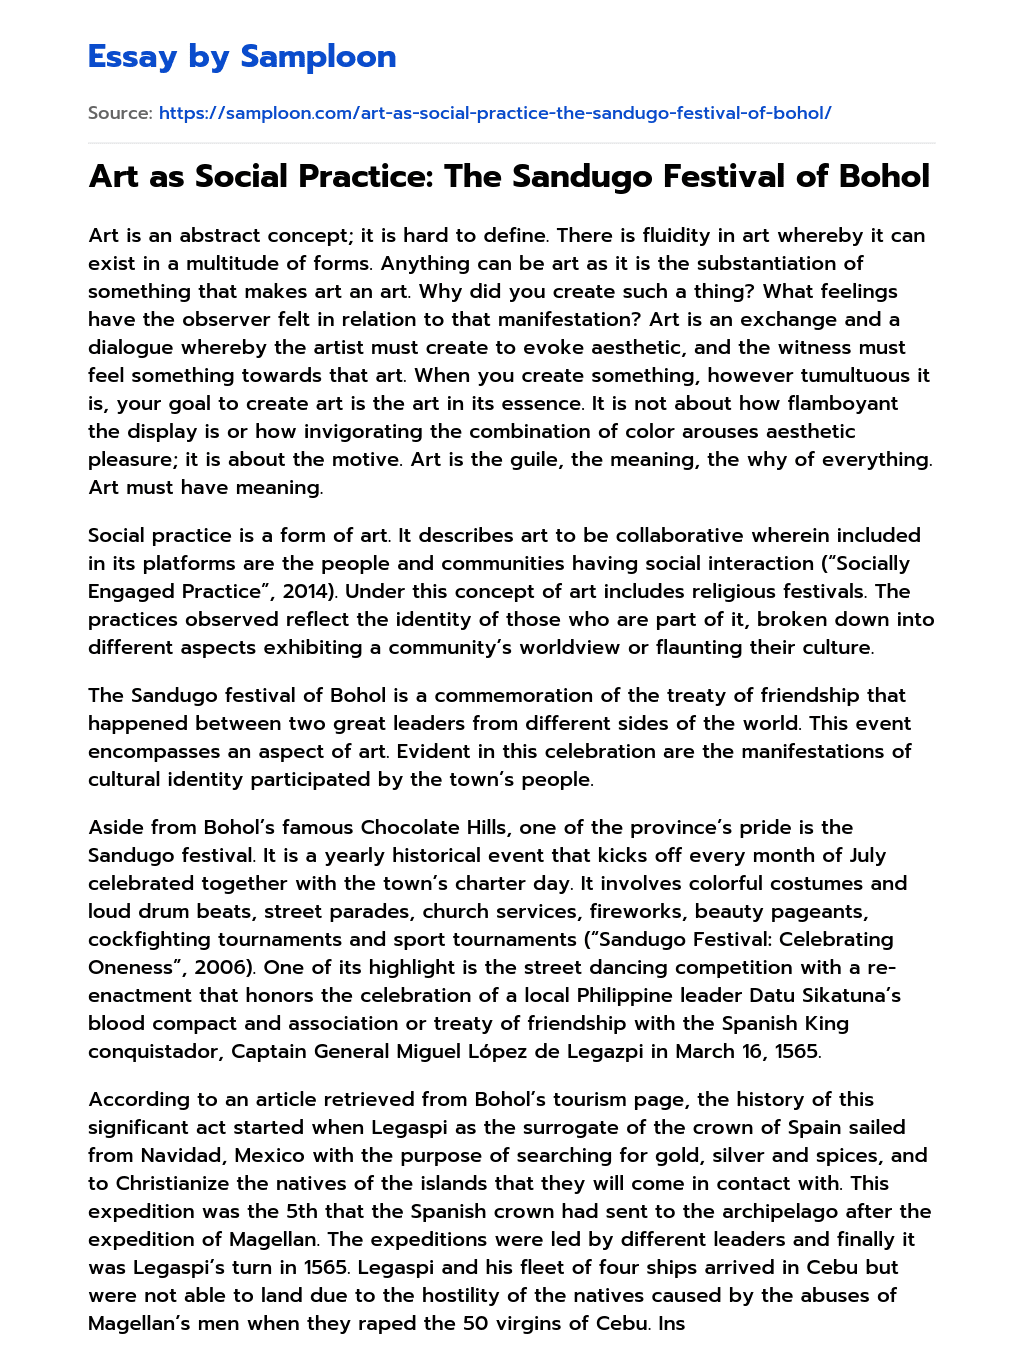 Art as Social Practice: The Sandugo Festival of Bohol essay